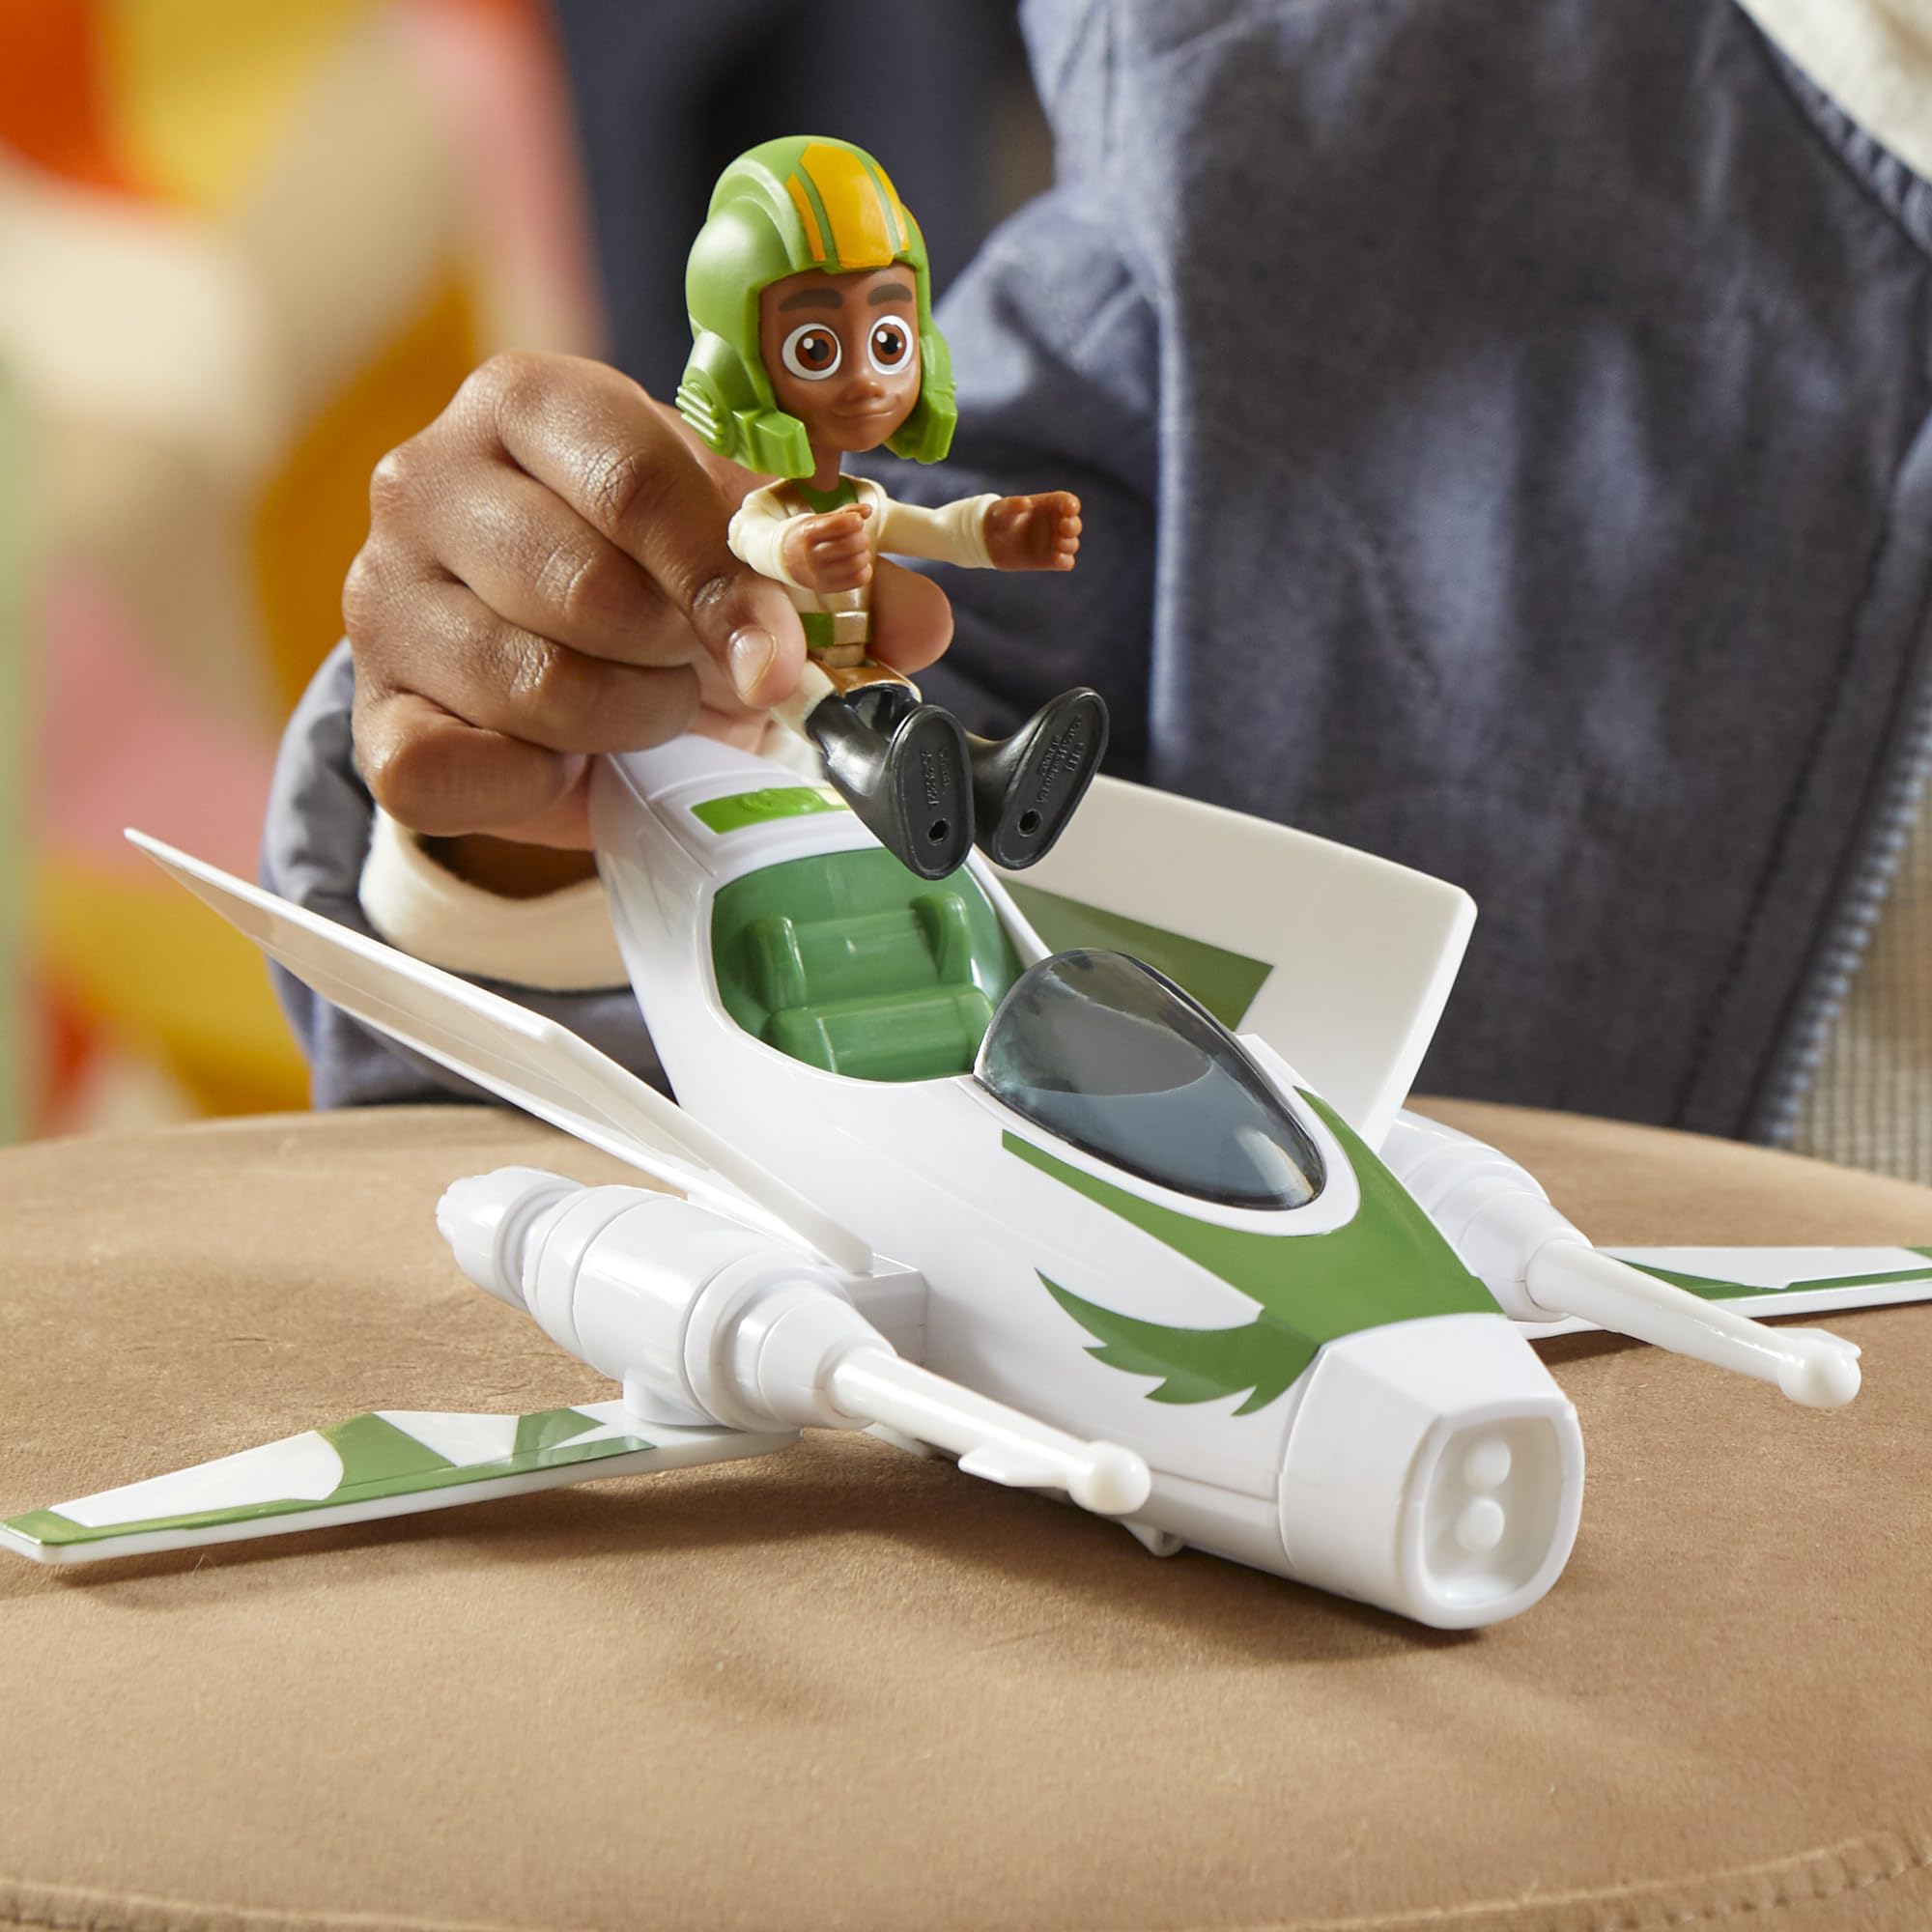 STAR WARS Jedi Pilot Kai Brightstar, 4-Inch Scale Action Figure & Star Wars Ship, Toys, Preschool Toys for 3 Year Old Boys & Girls